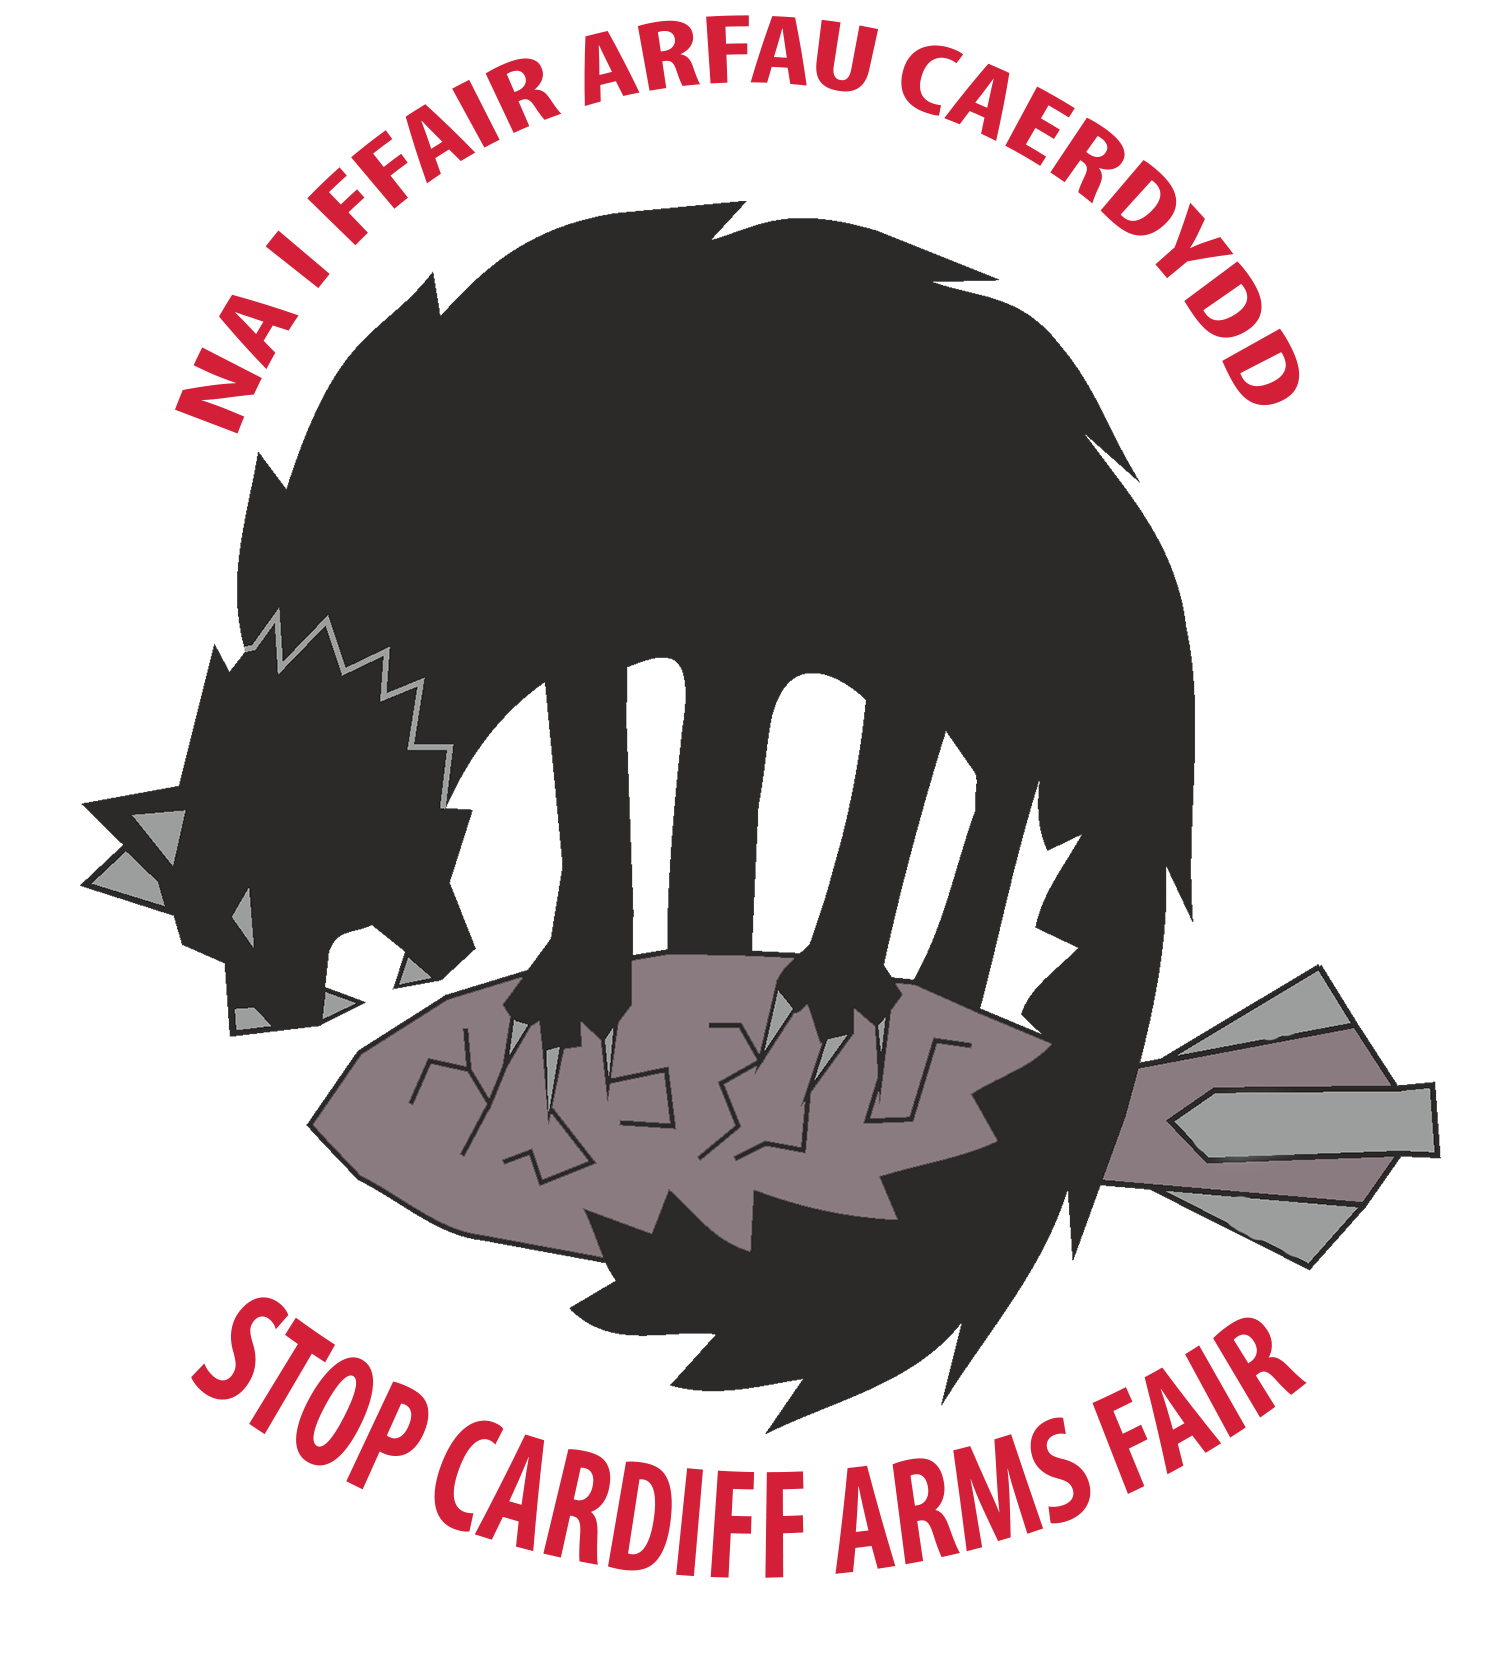 Na i Ffair Arfau Caerdydd / Stop The Cardiff Arms Fair